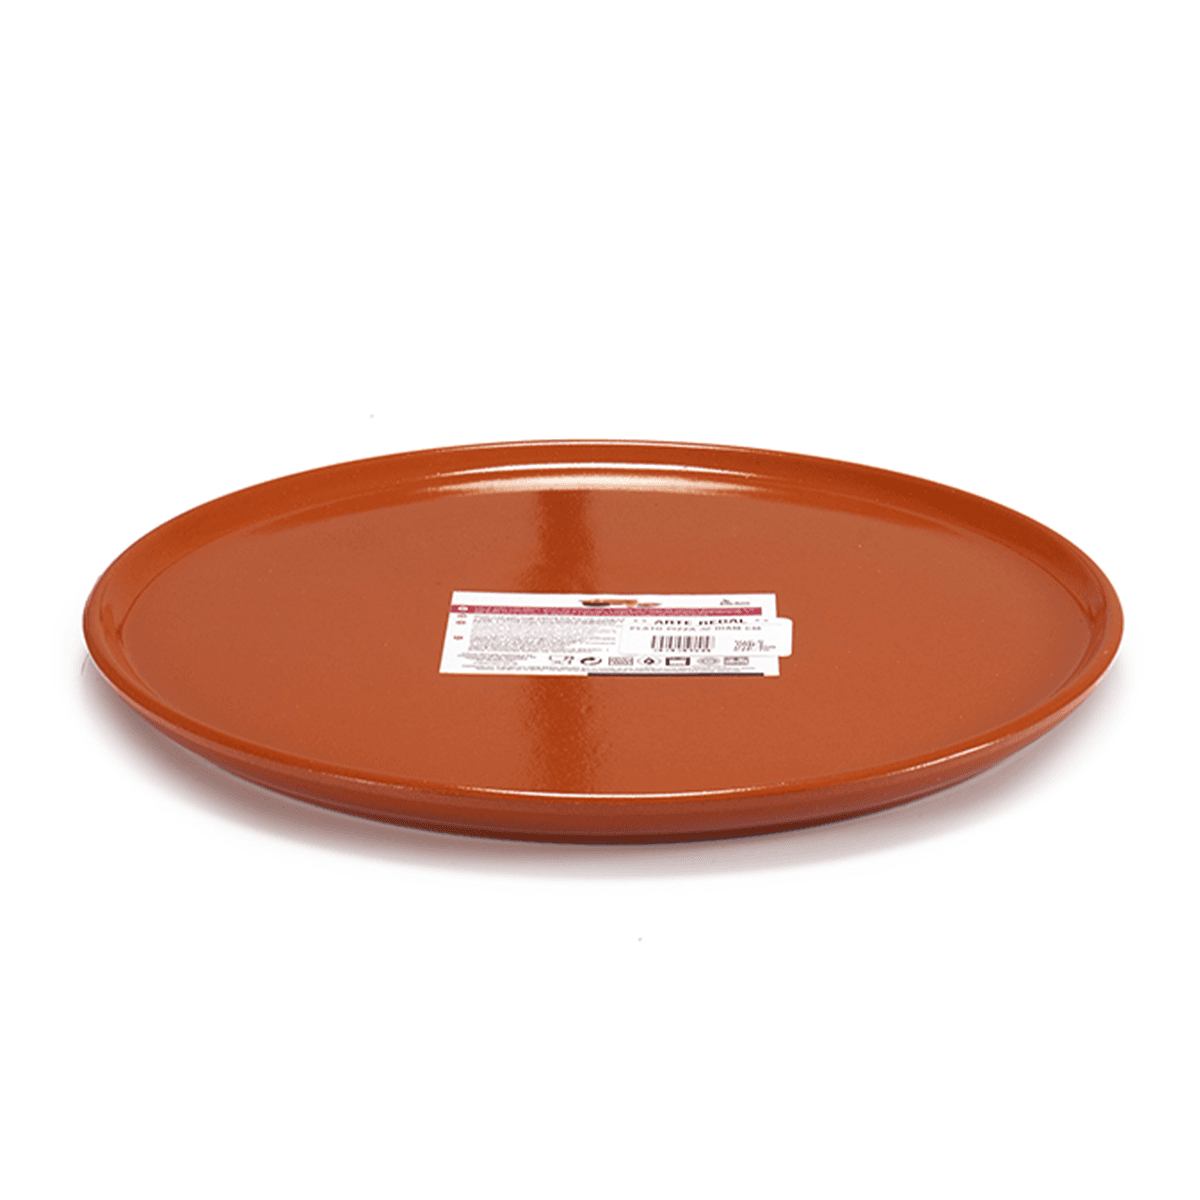 صينية بيتزا فخار 32 سم صناعة اسبانيا بني آرت ريجال Arte Regal Brown Clay Pizza Plate